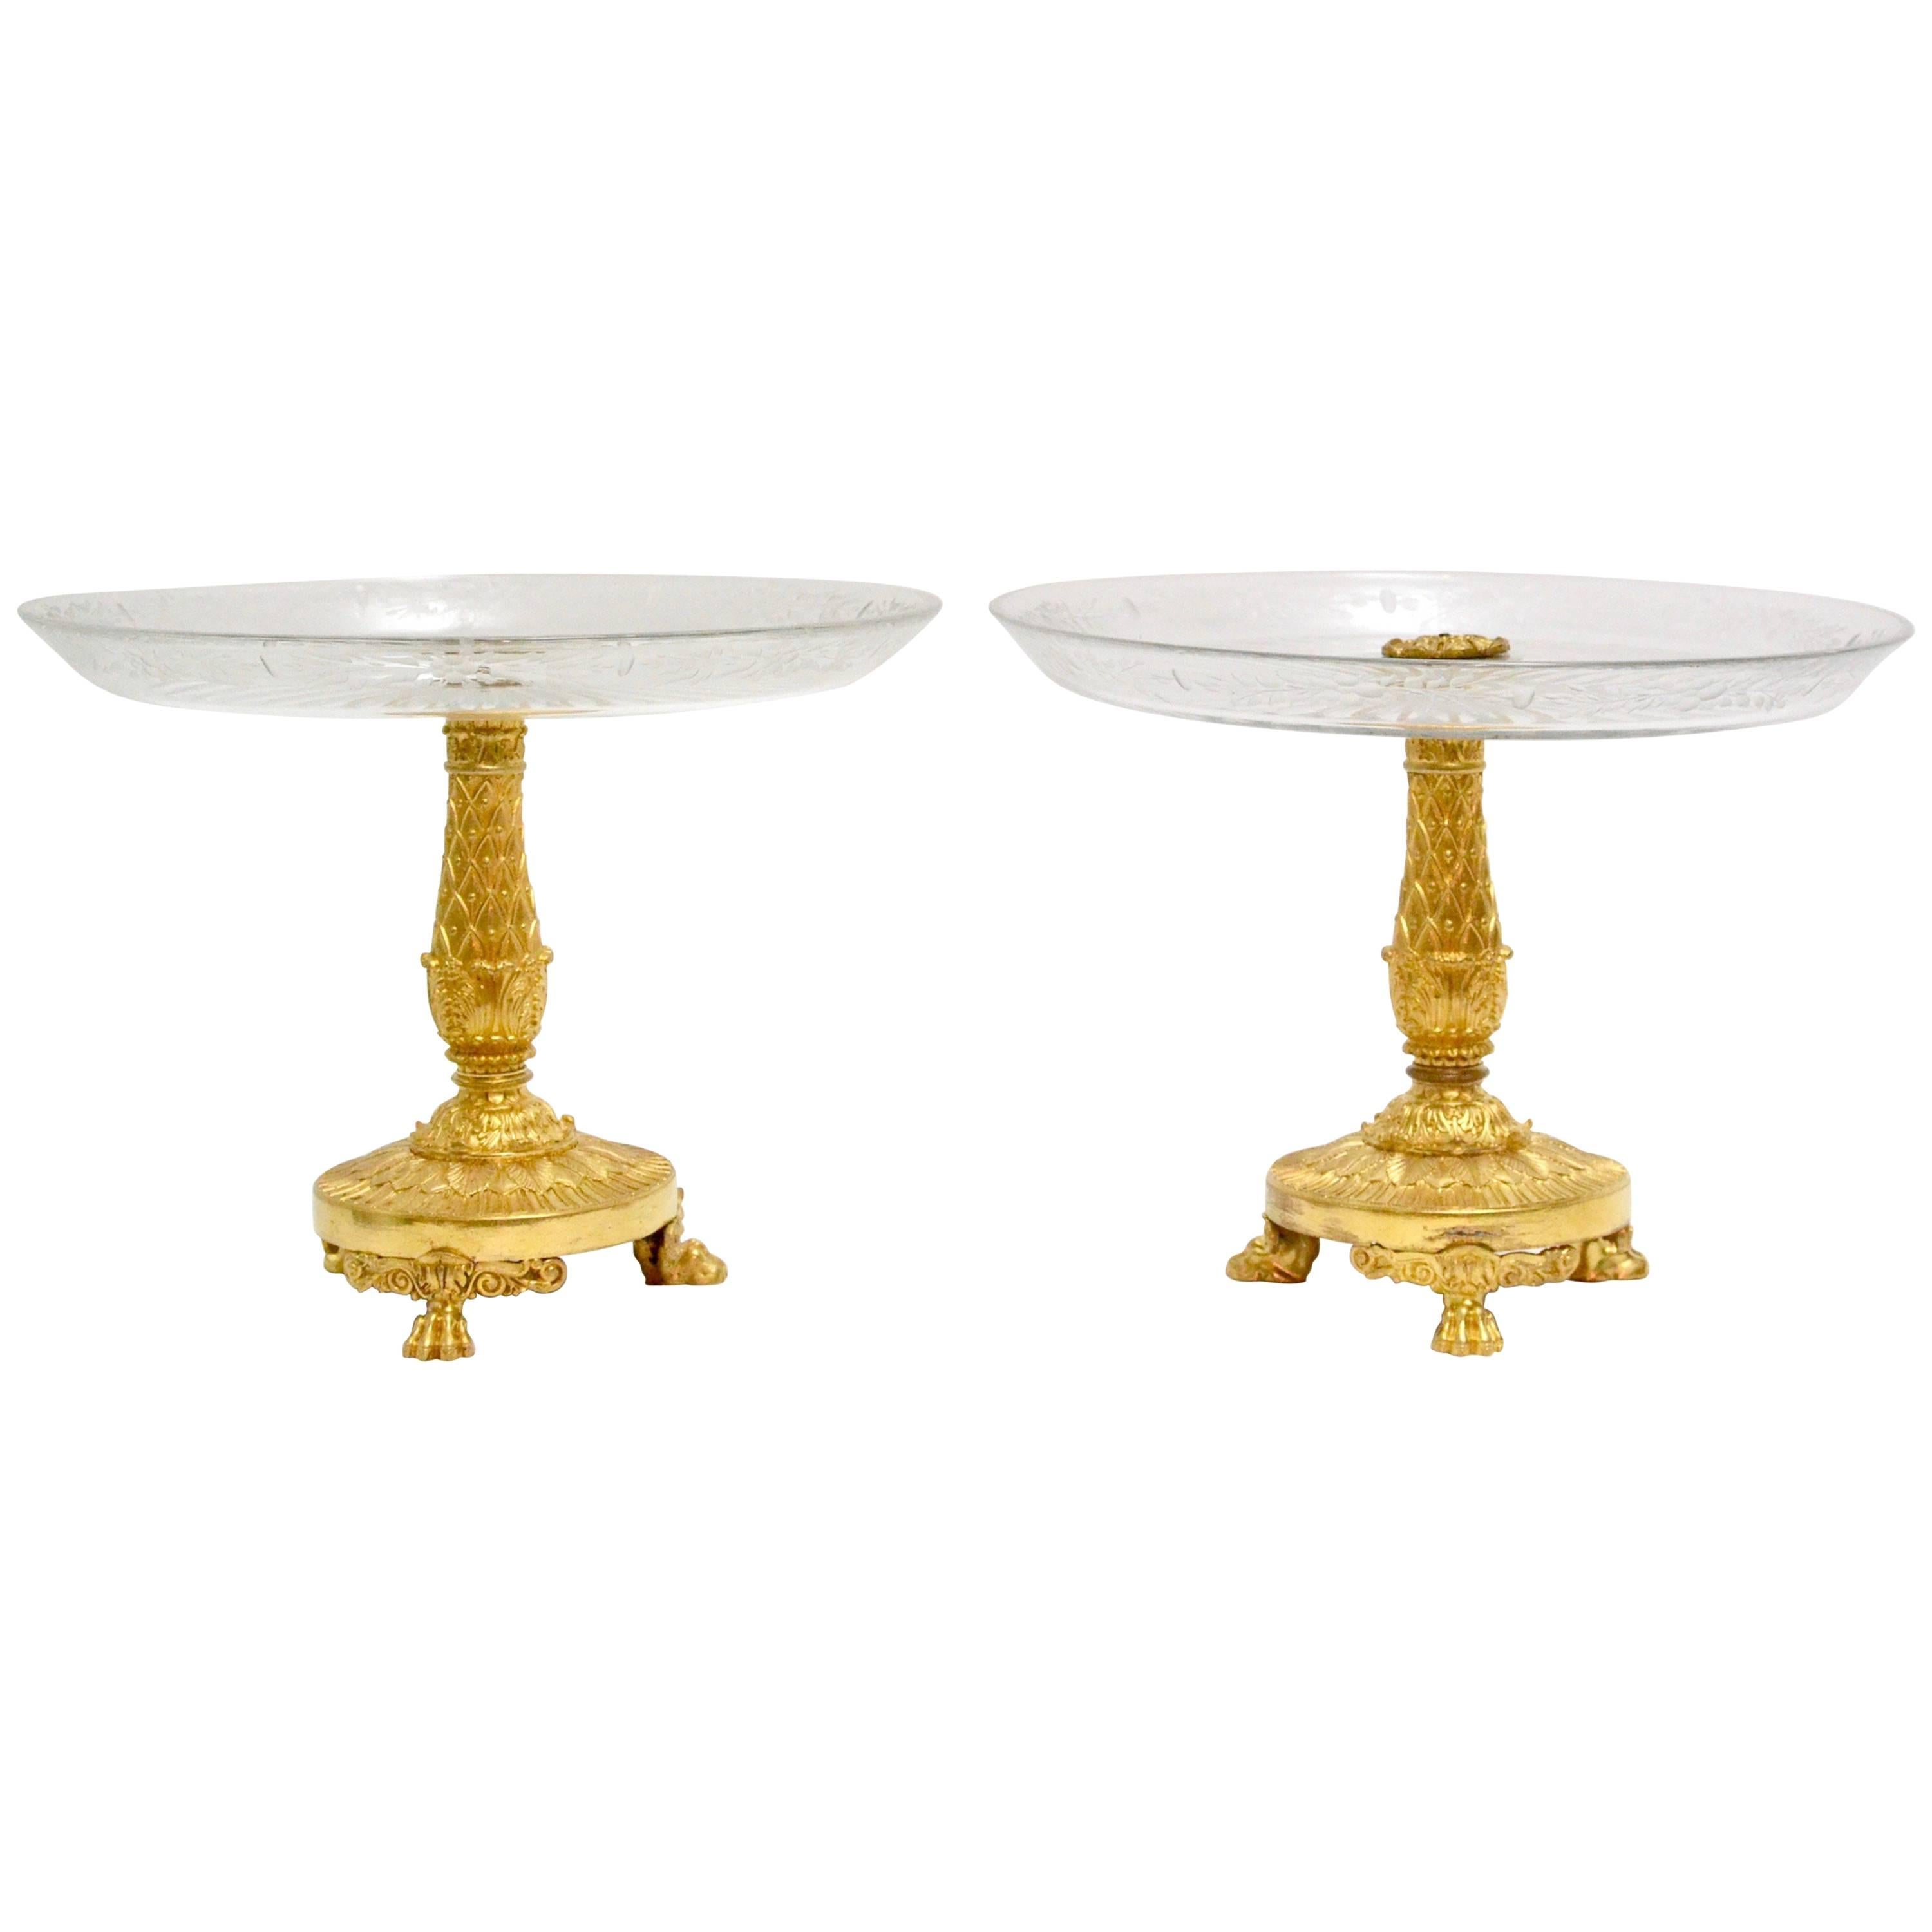 Pair of Empire Gilt Bronze and Cut Glass Empire Tazzas, Surtout De Table